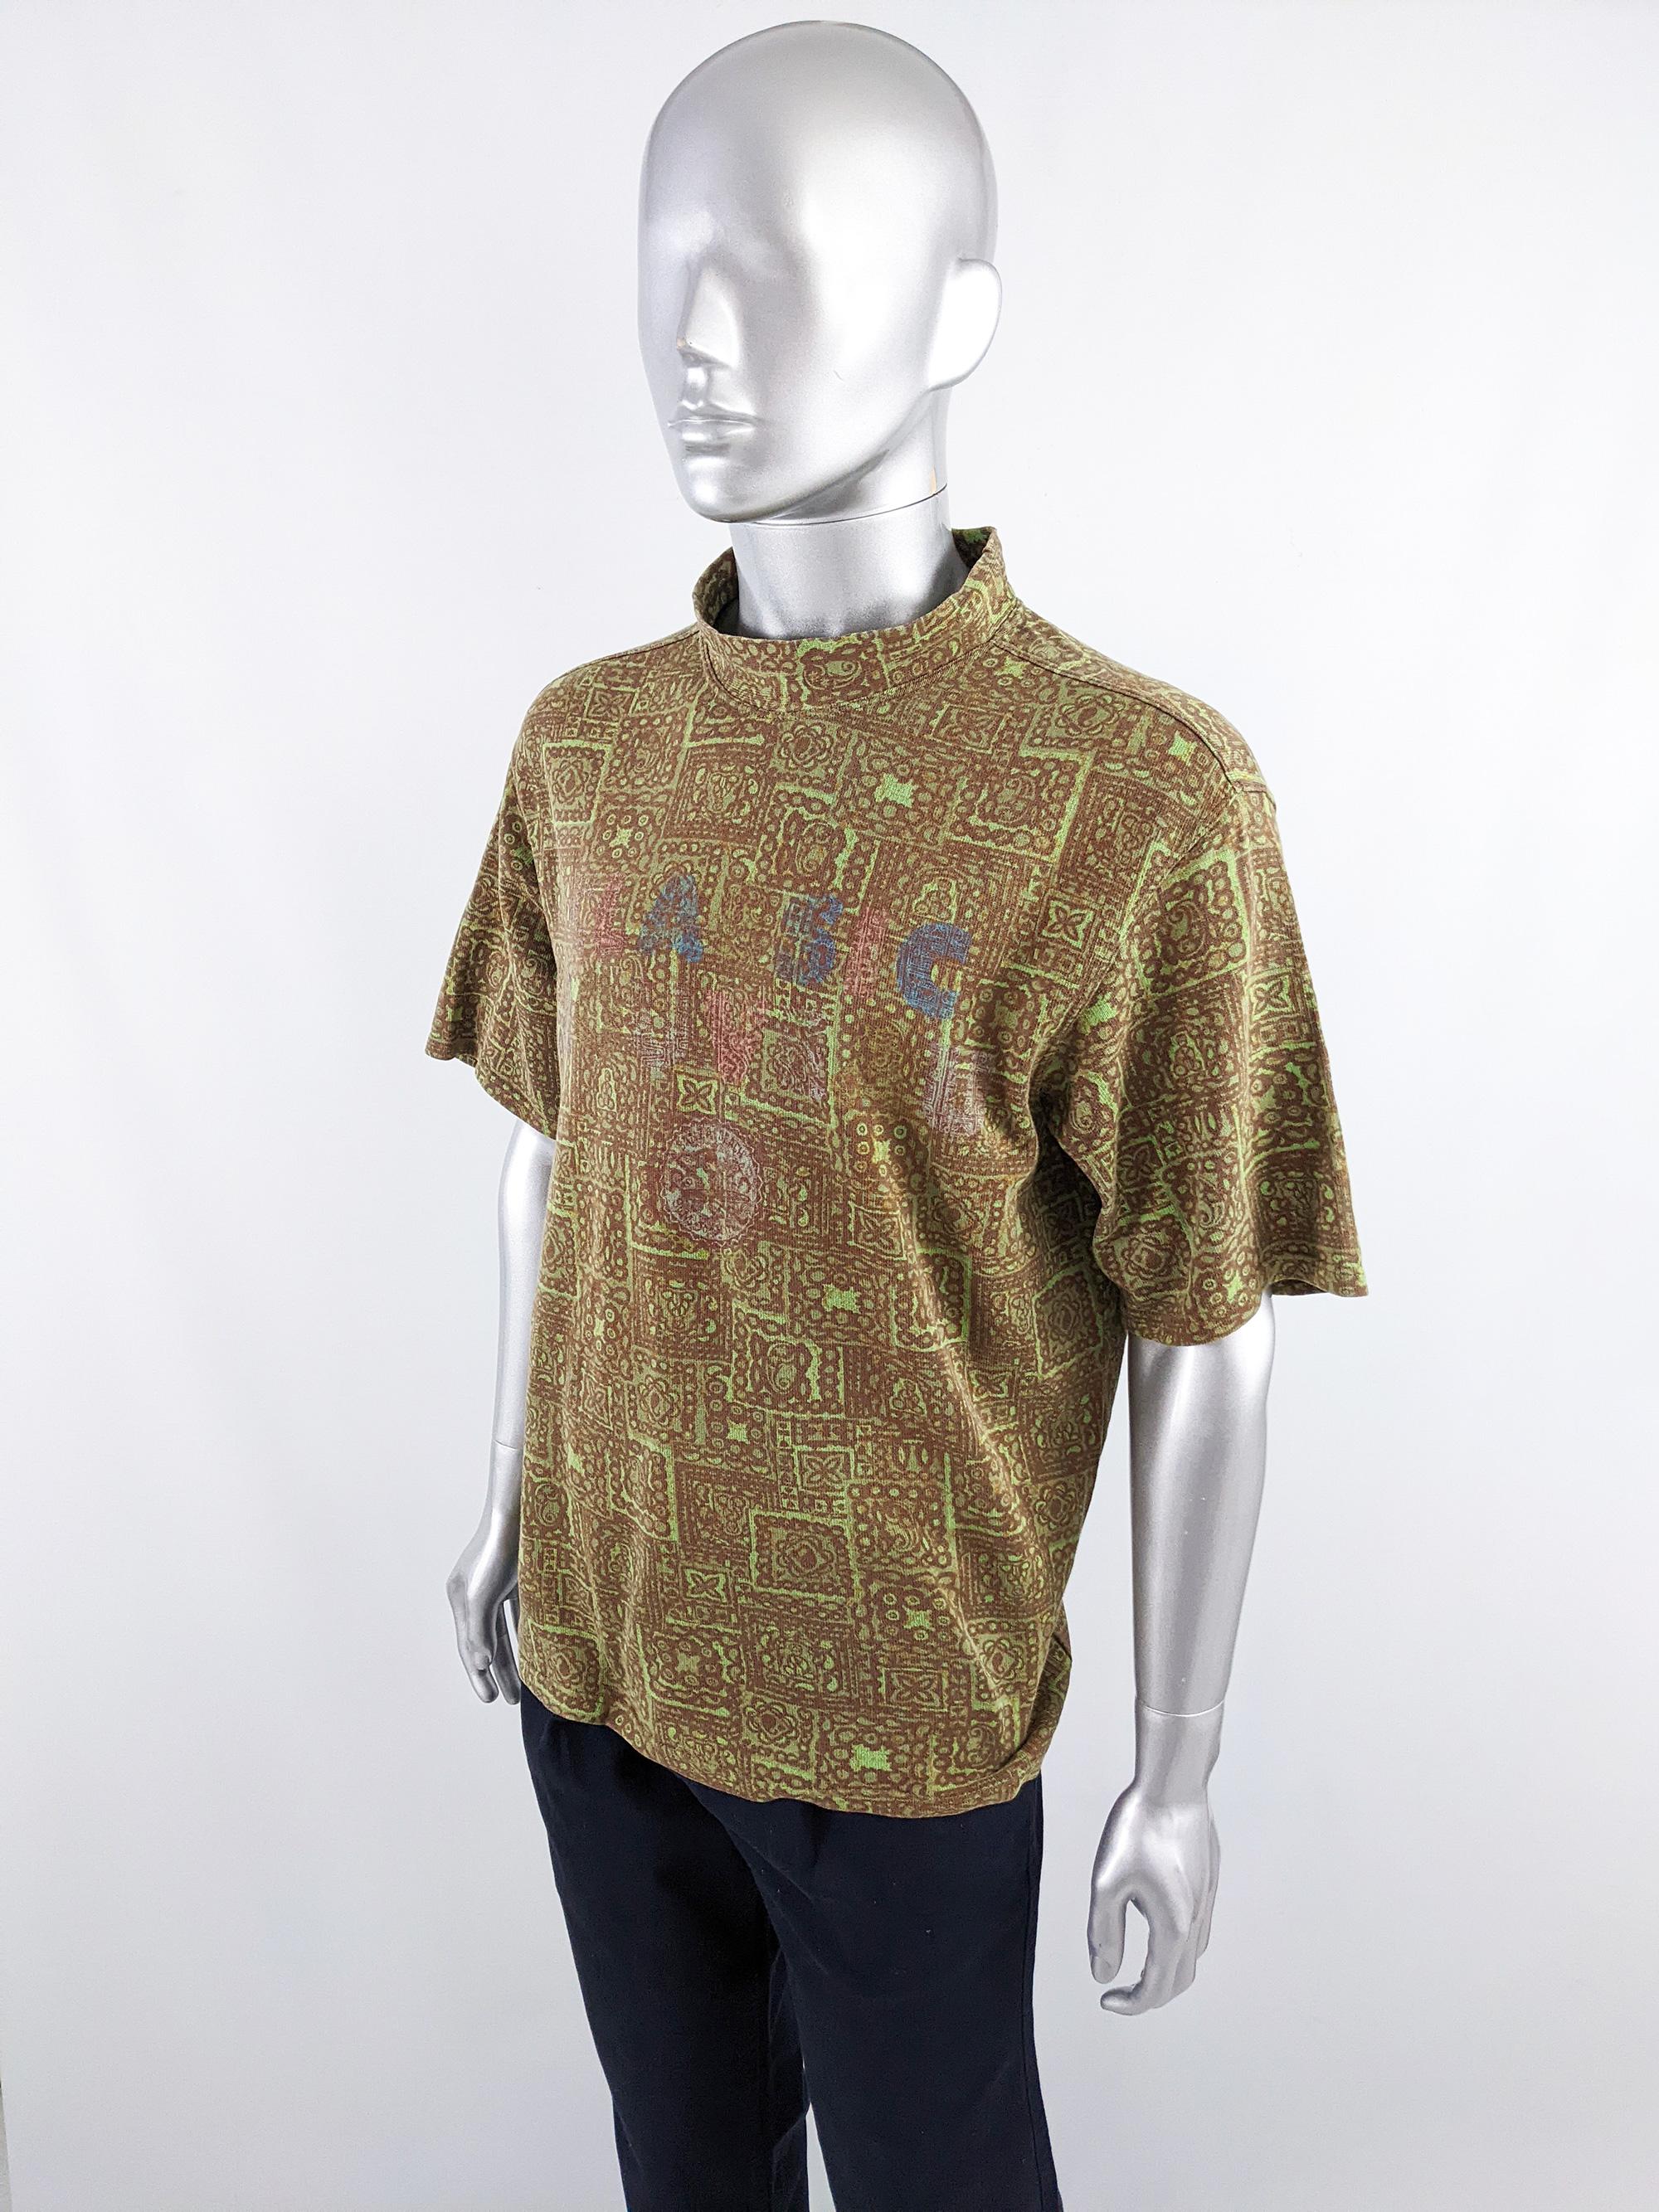 Fiorucci Vintage 1980s Green & Brown Surfer Aztec TShirt Rave Tee Shirt For Sale 1